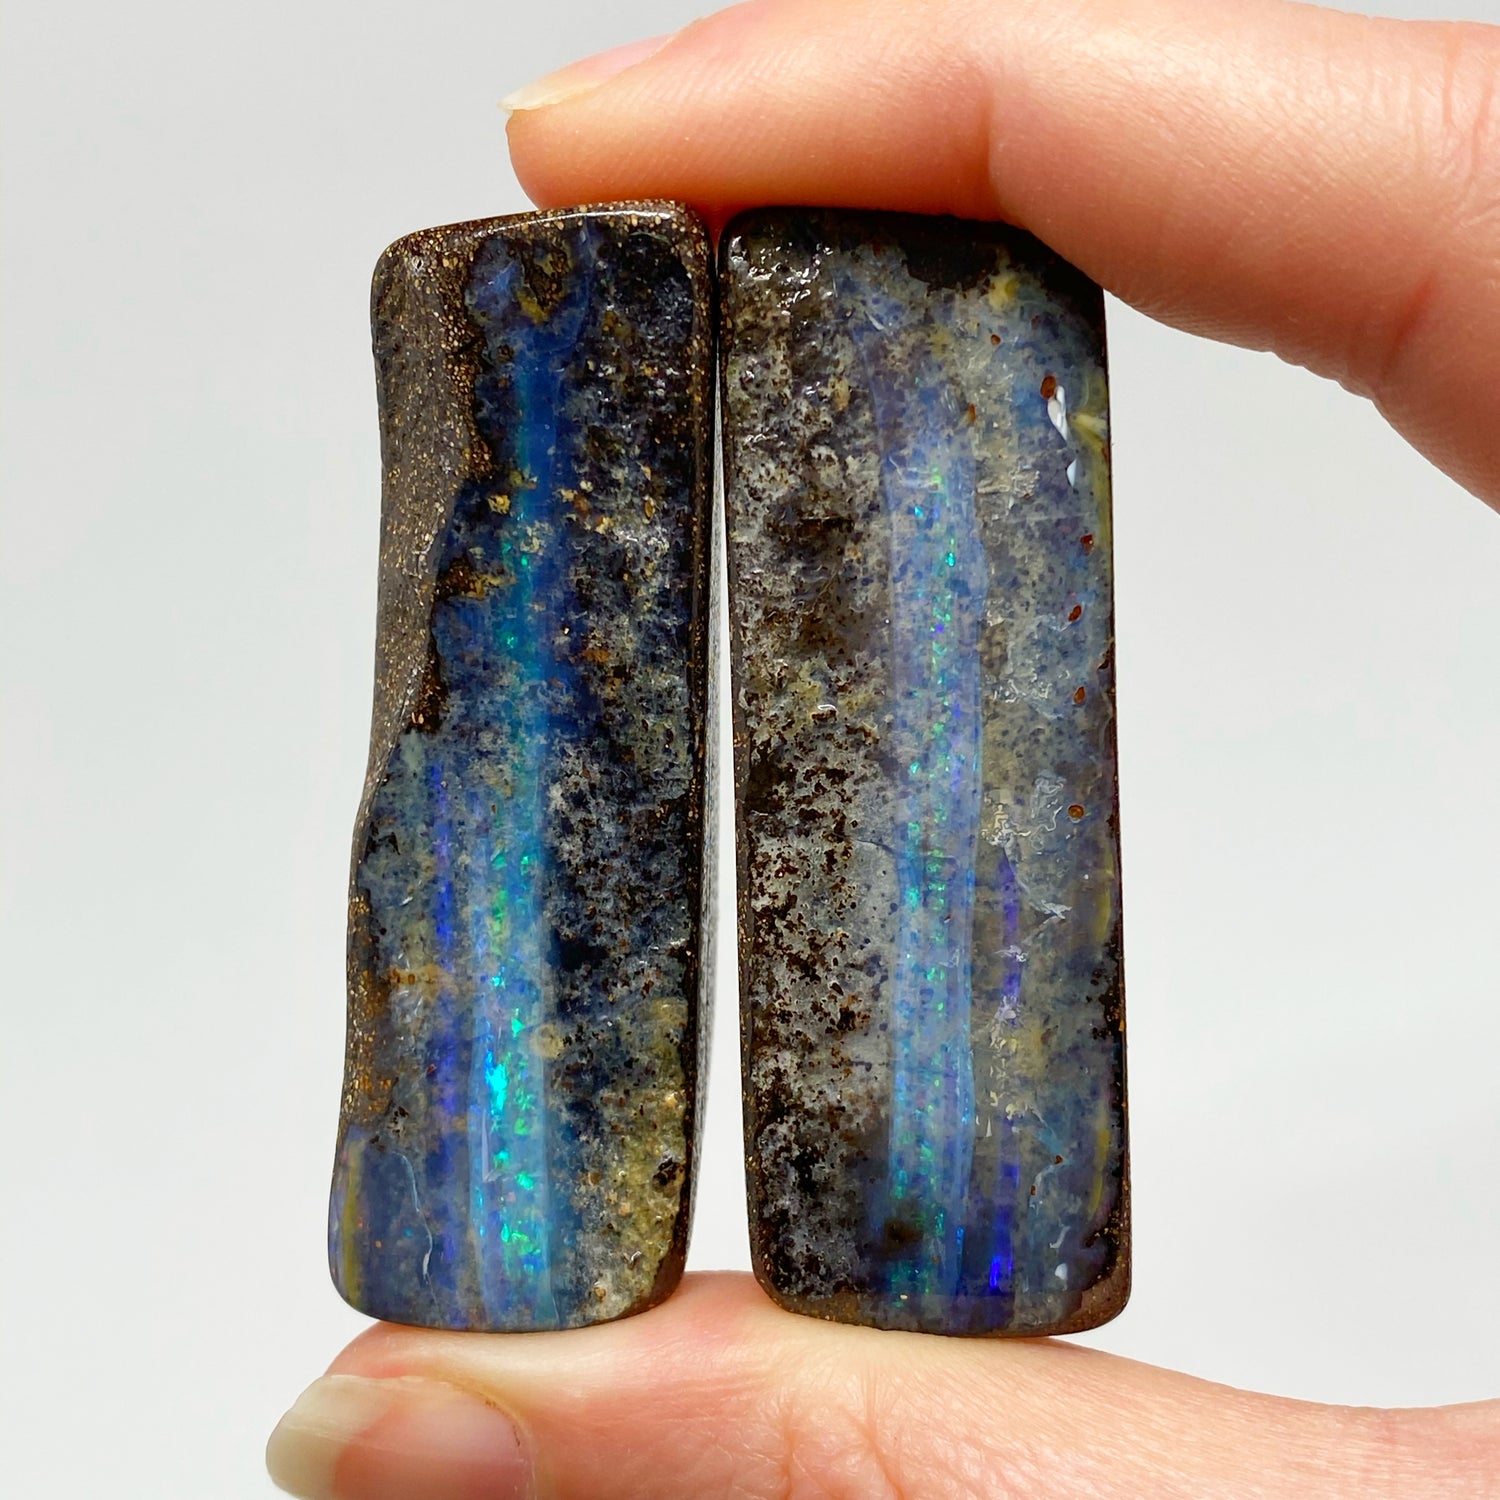 Australian Boulder Opal - 290 Ct green-blue boulder opal 'split' specimen pair - Broken River Mining